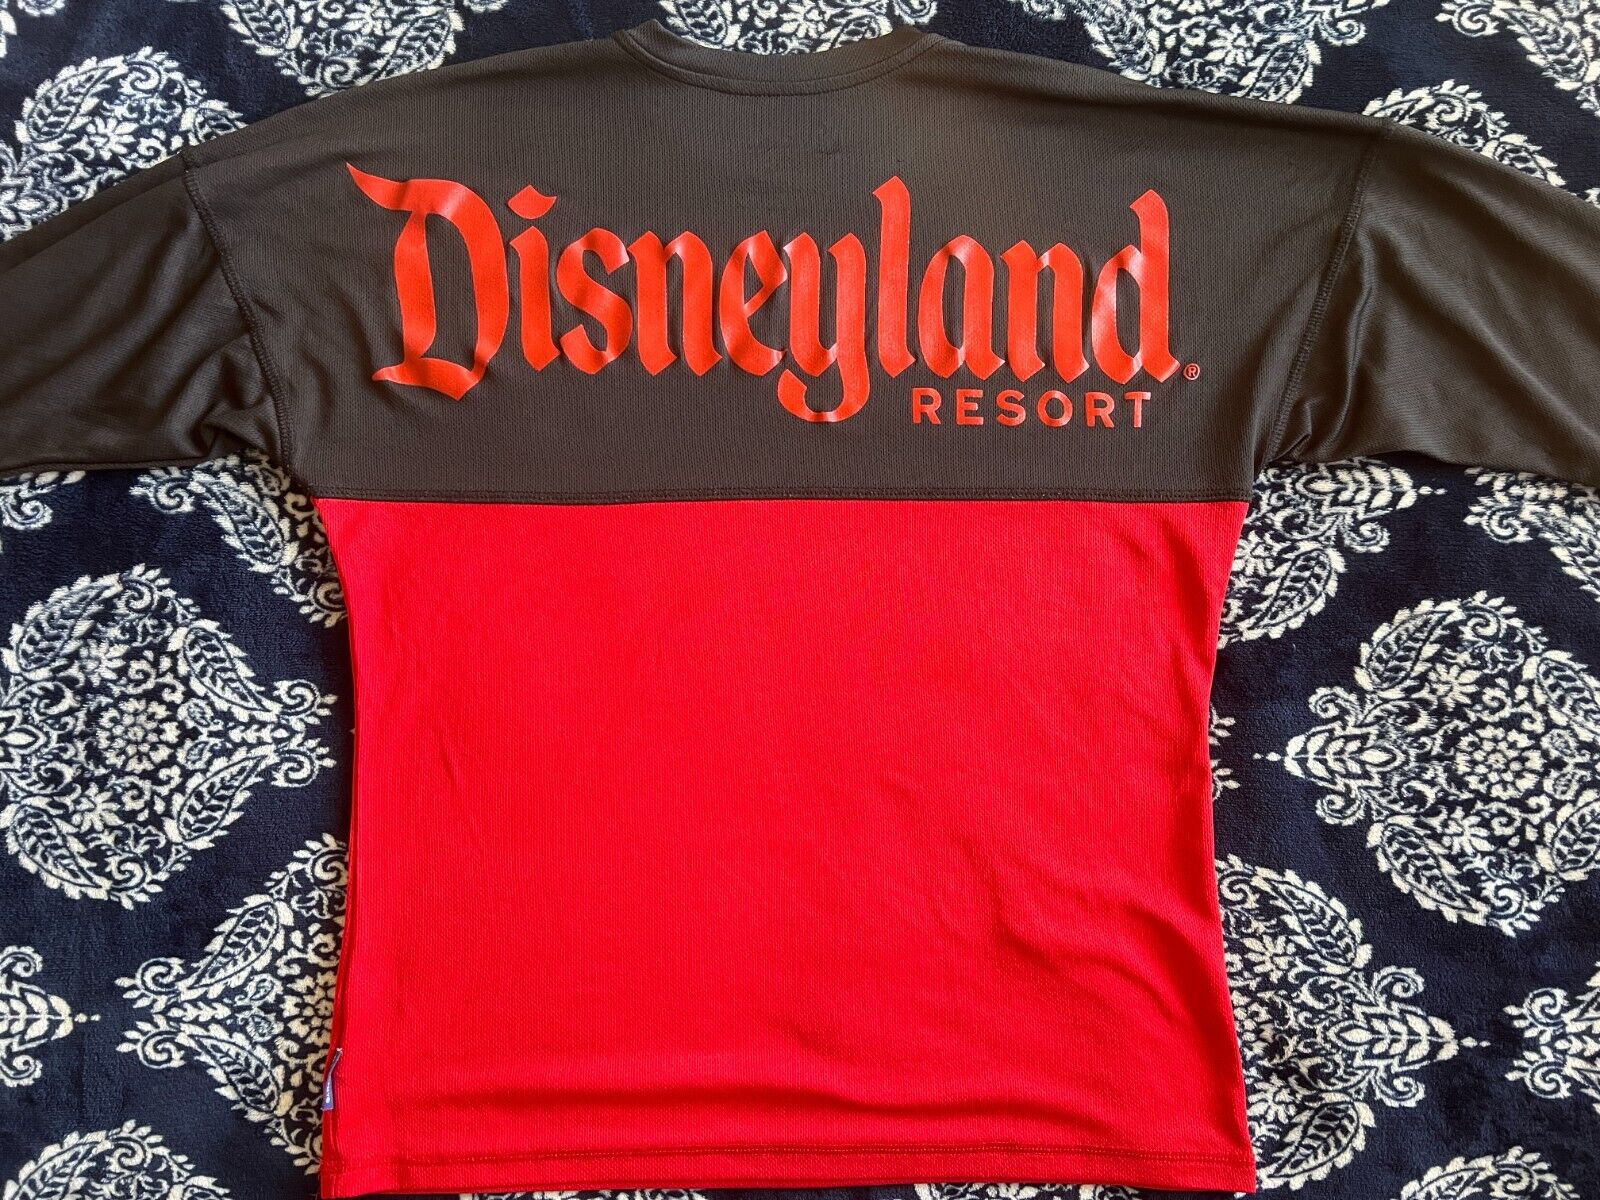 Authentic Disneyland Resort Black & Red Spirit Jersey Adult Size Small USA Made